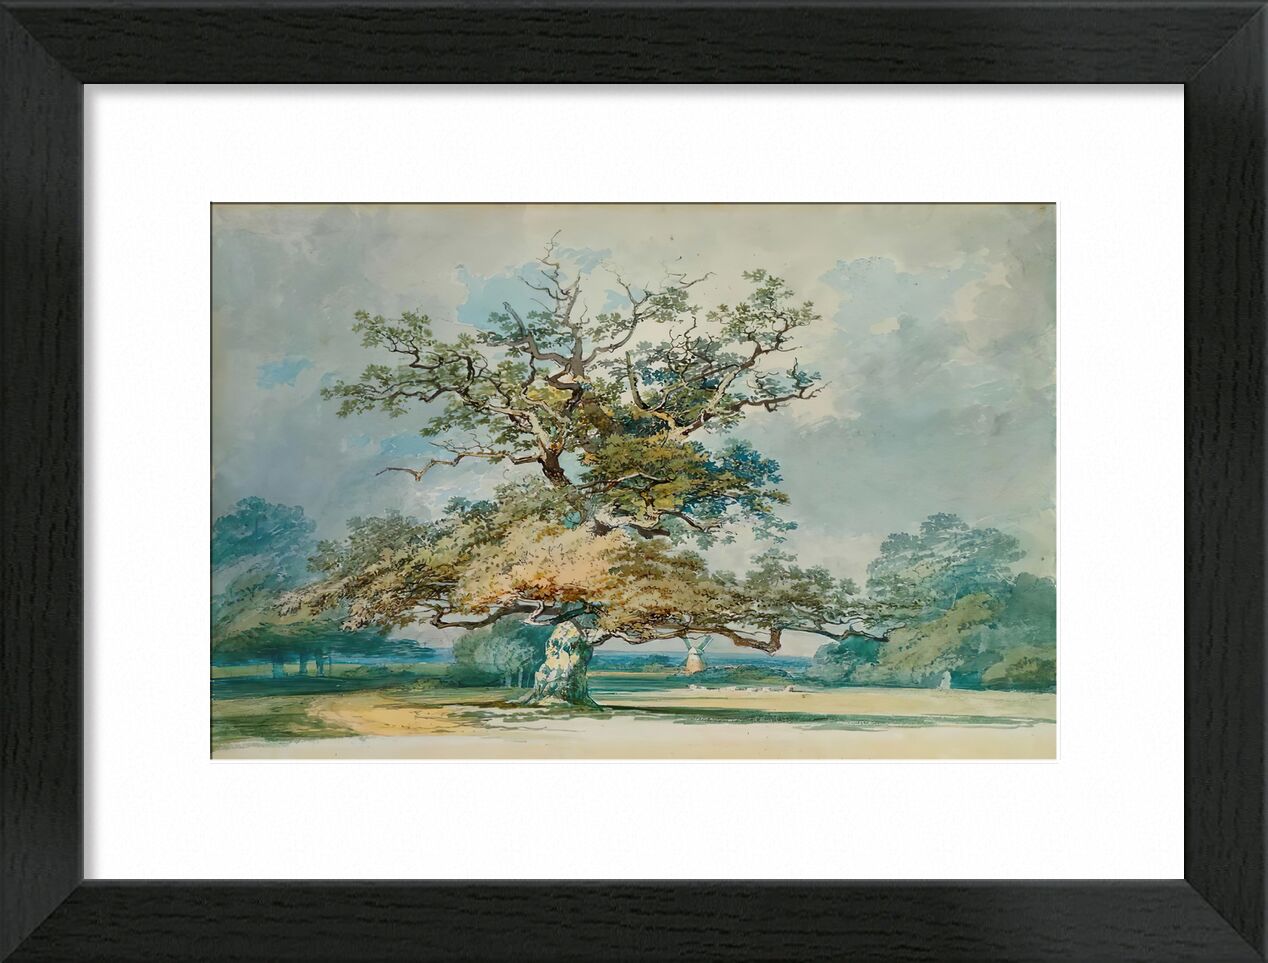 A Landscape with an Old Oak Tree - TURNER von Bildende Kunst, Prodi Art, TURNER, Baum, Blätter, Landschaft, Himmel, Eiche